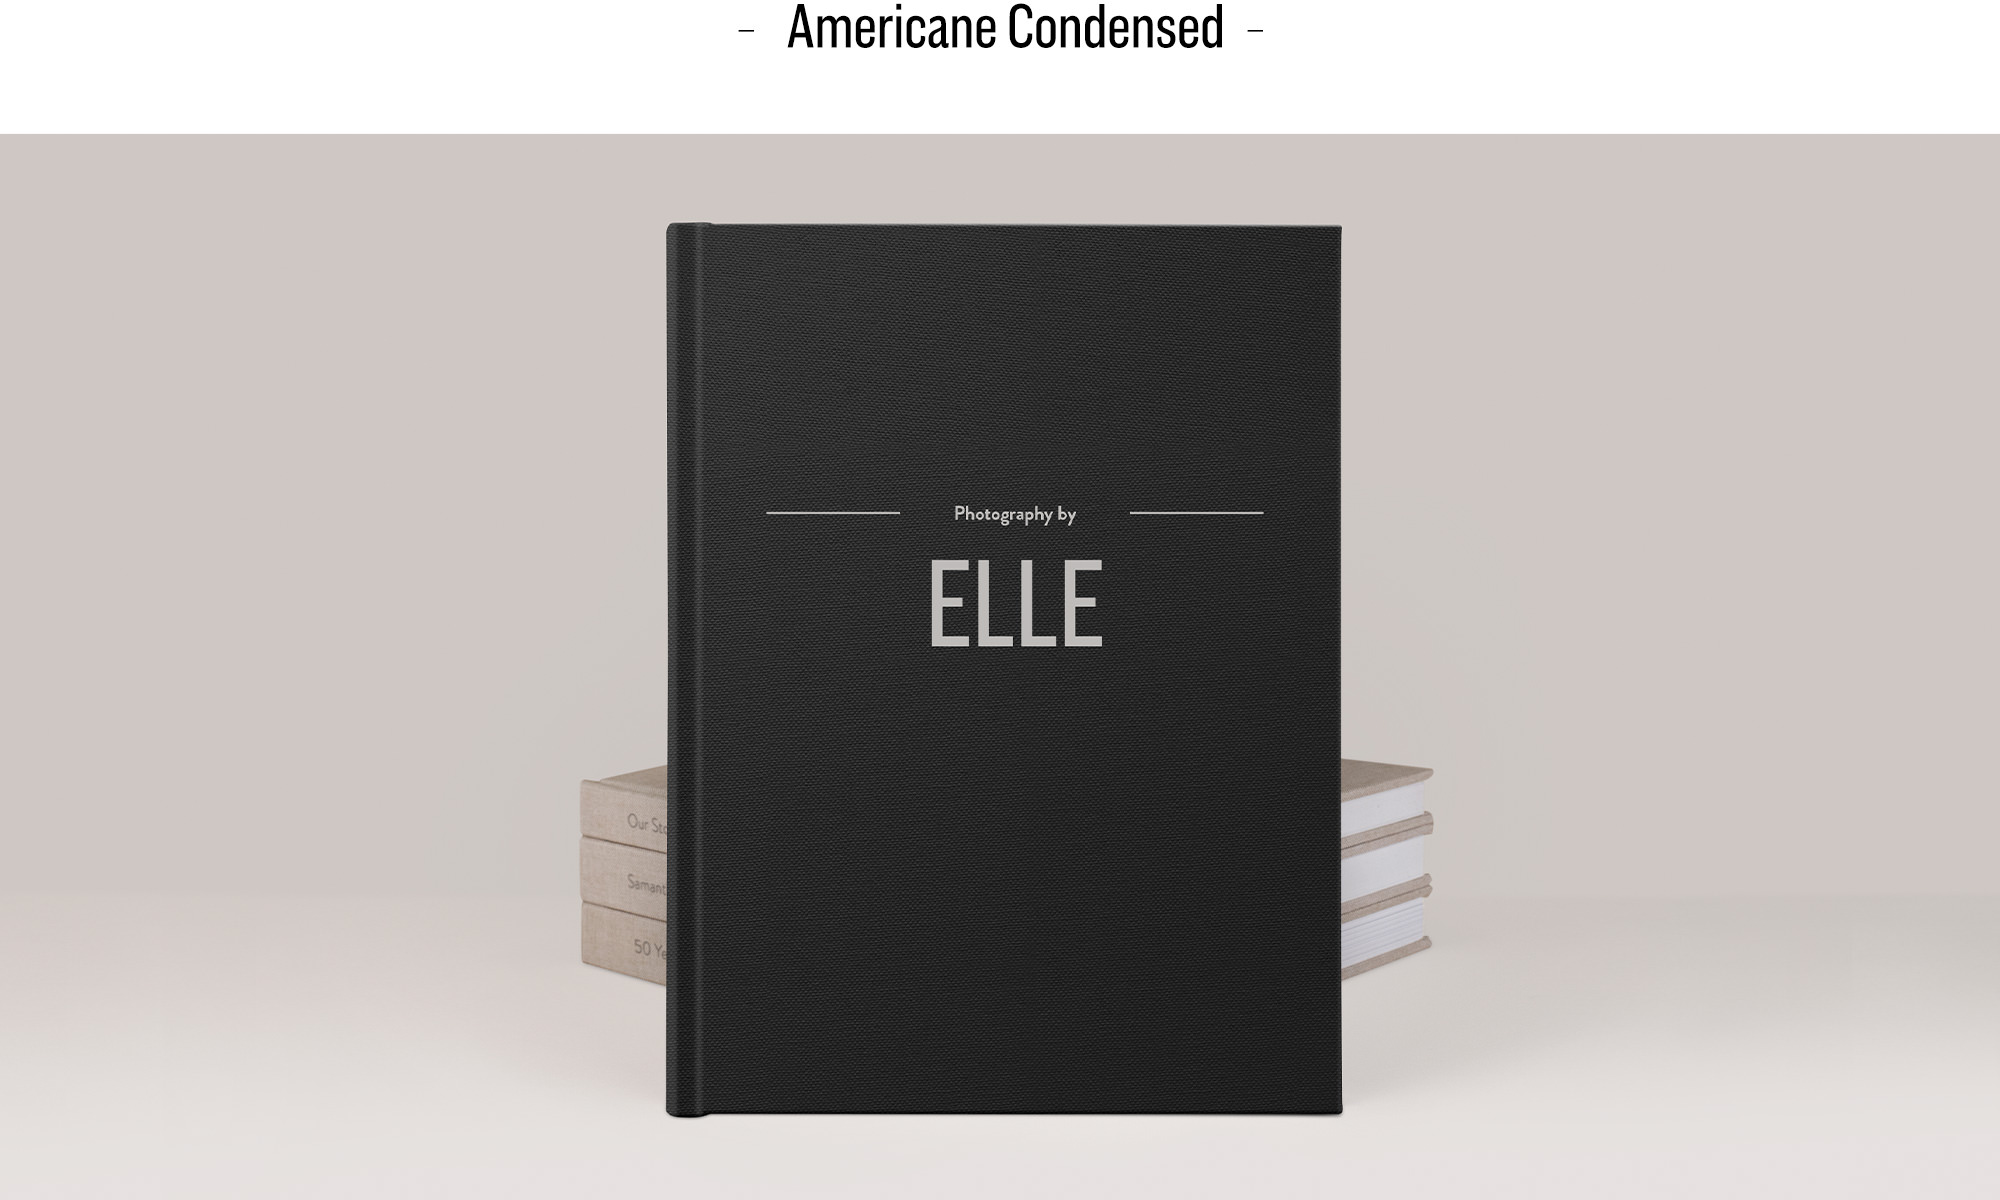 Premium Photo Book with Americane Condensed font title